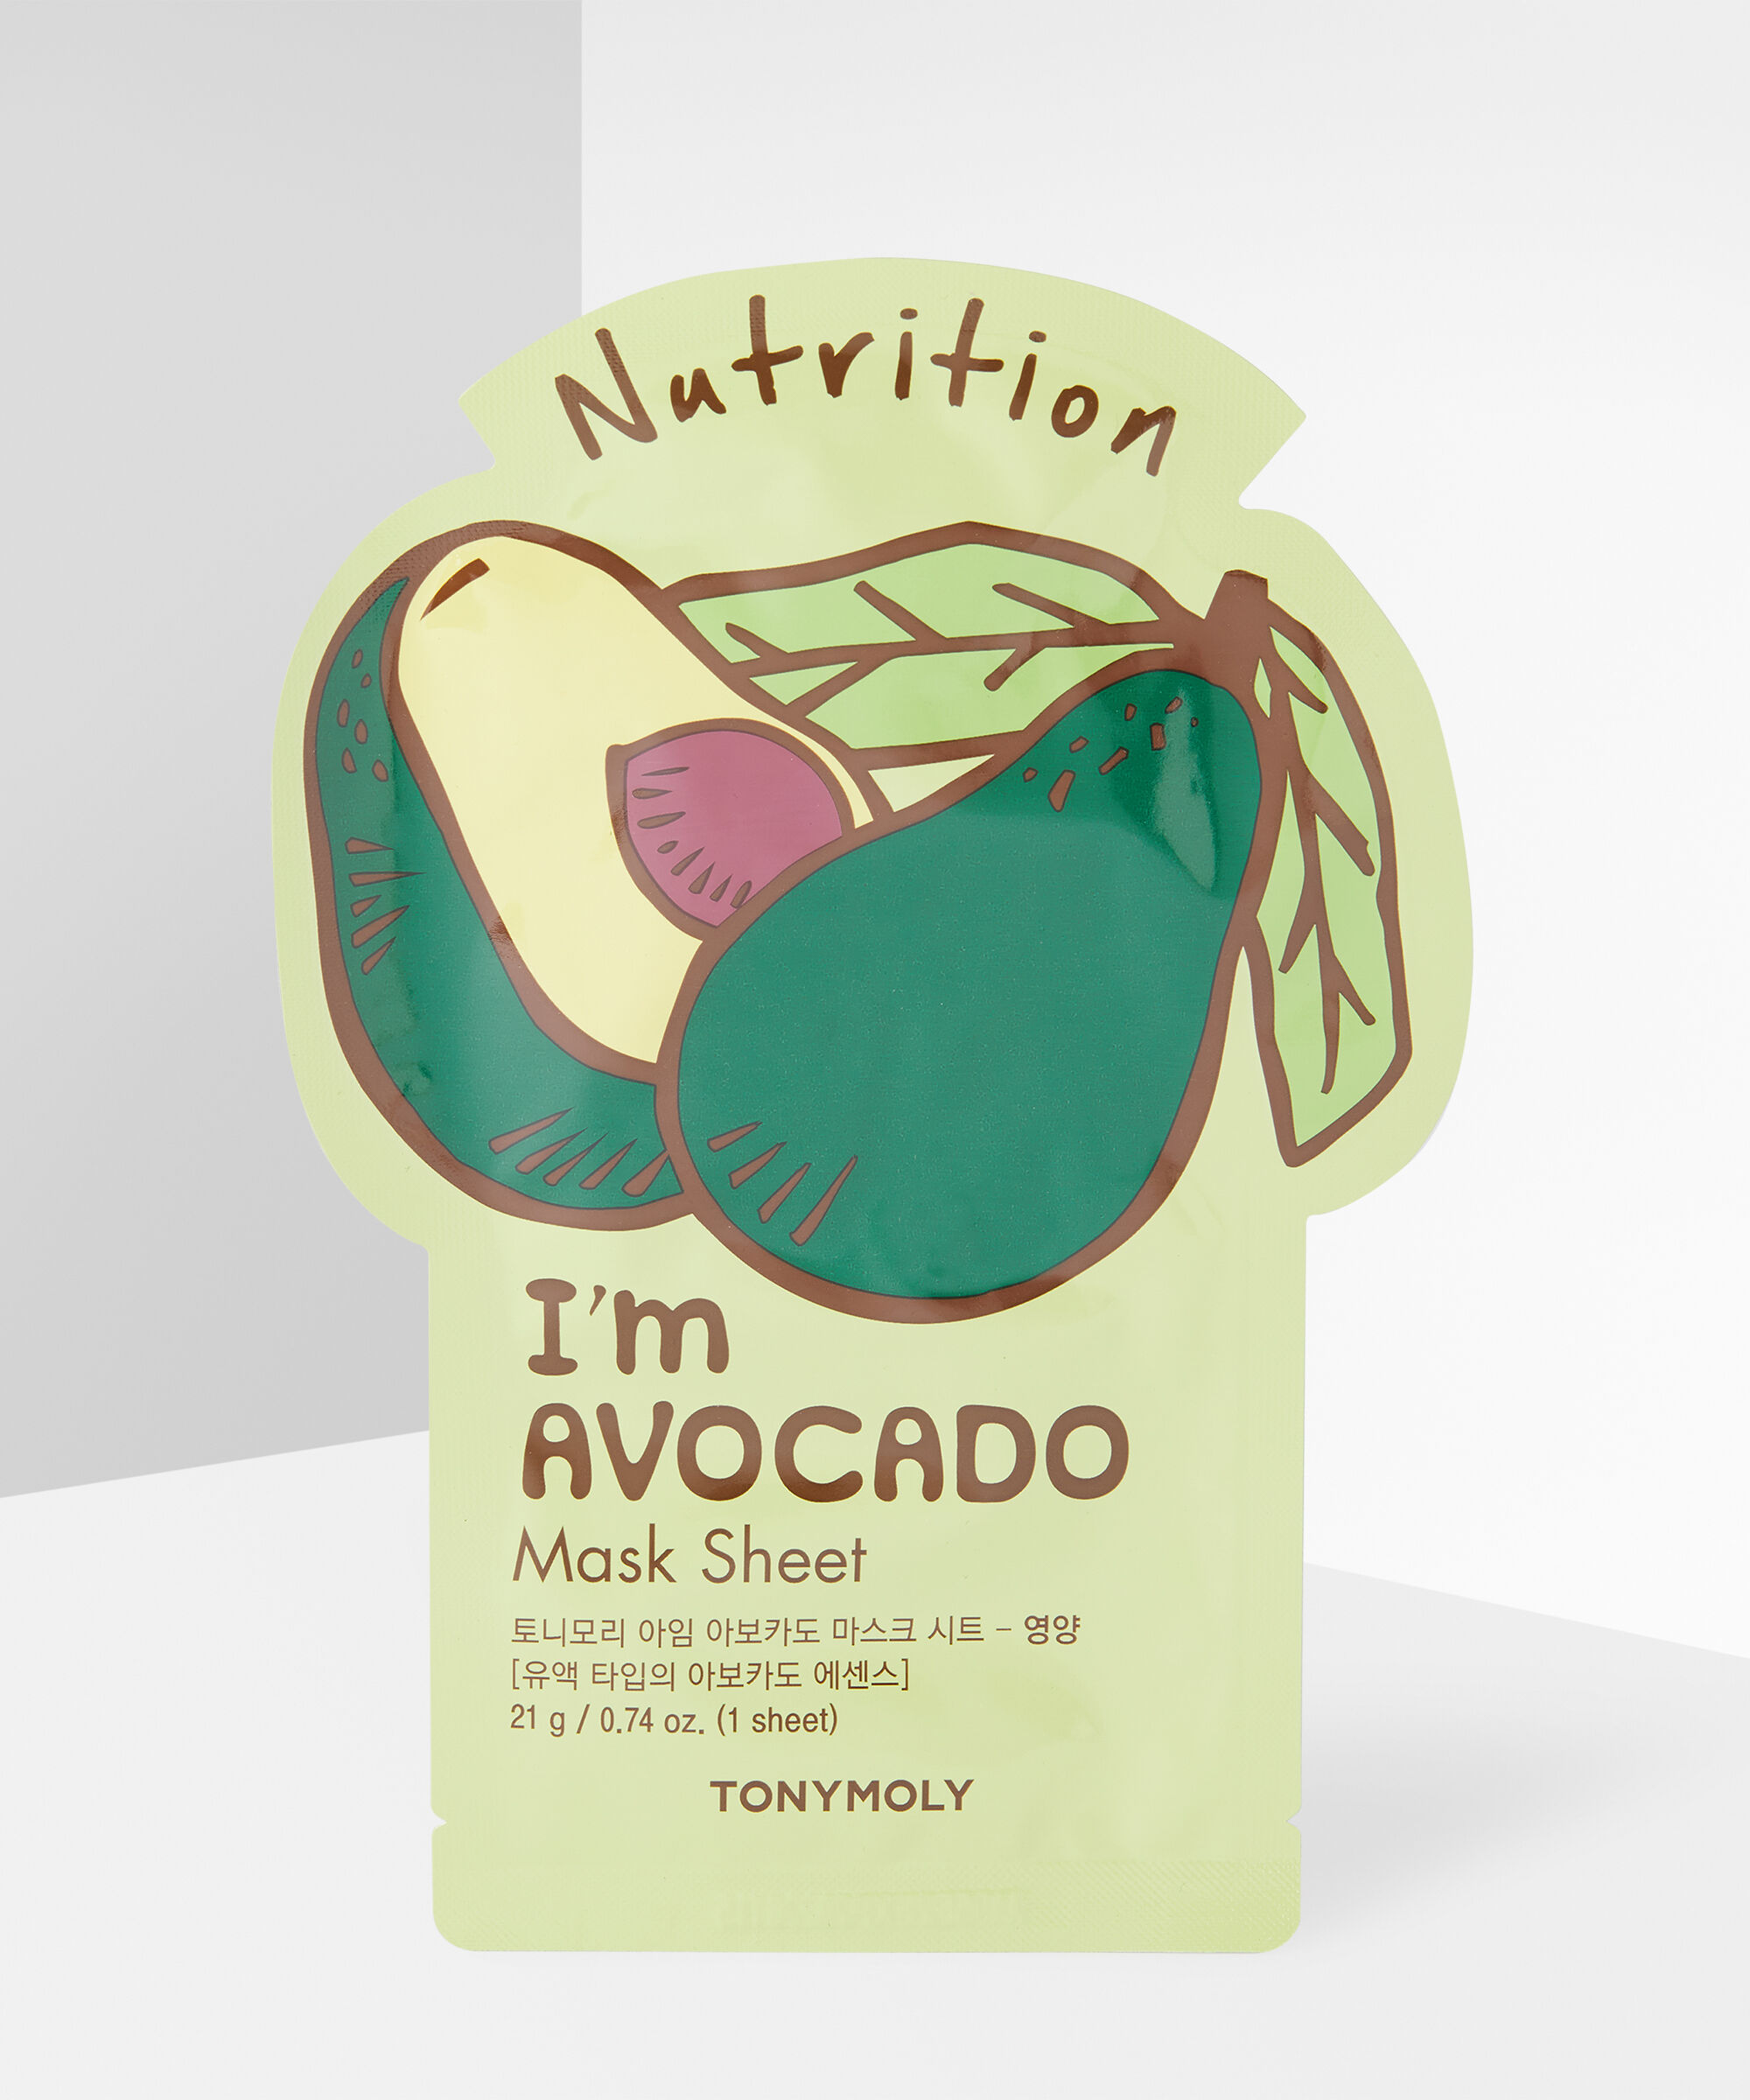 TONYMOLY - I'm Avocado Mask Sheet Nutrition